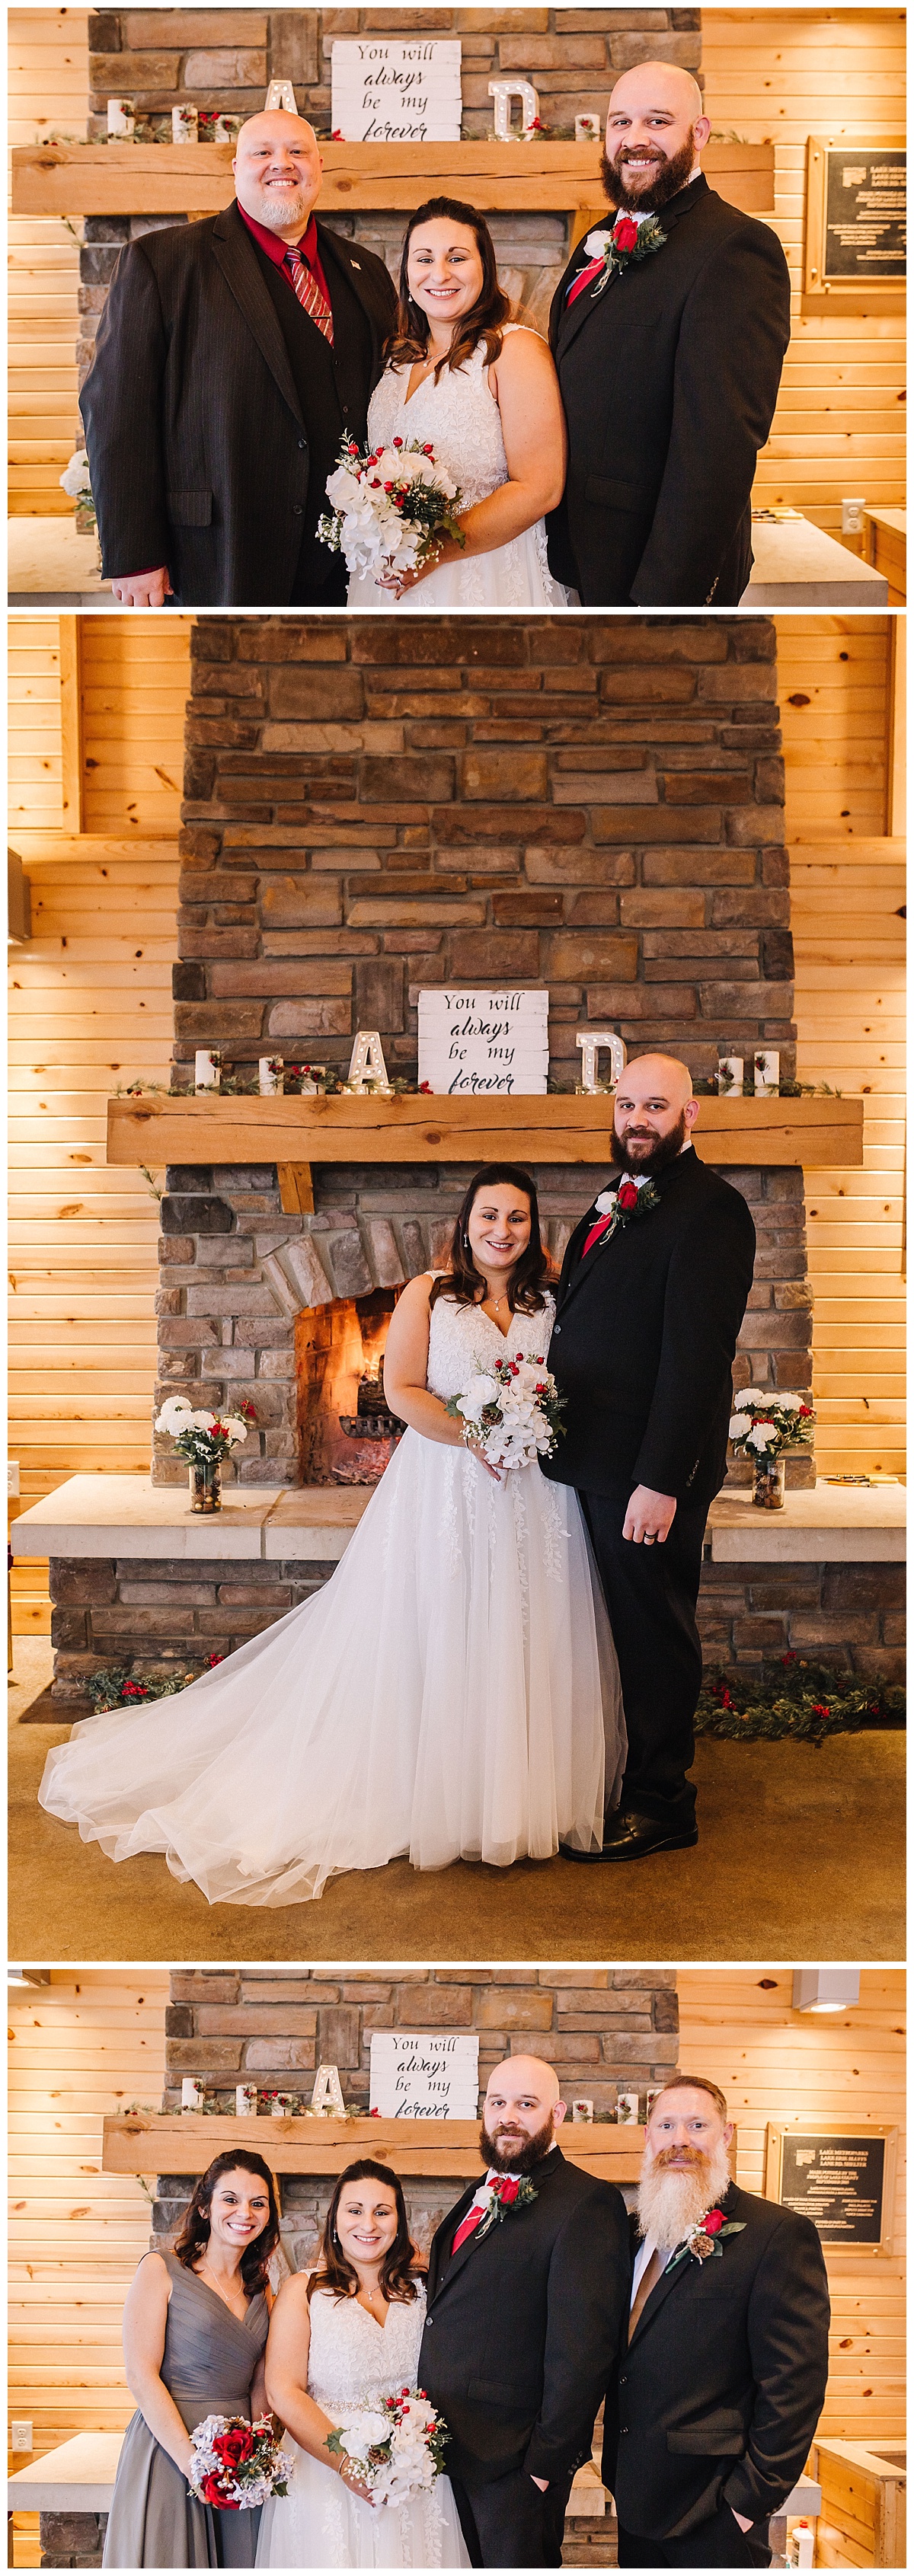 Lake Erie Bluffs - Northeast Ohio Wedding Photographer